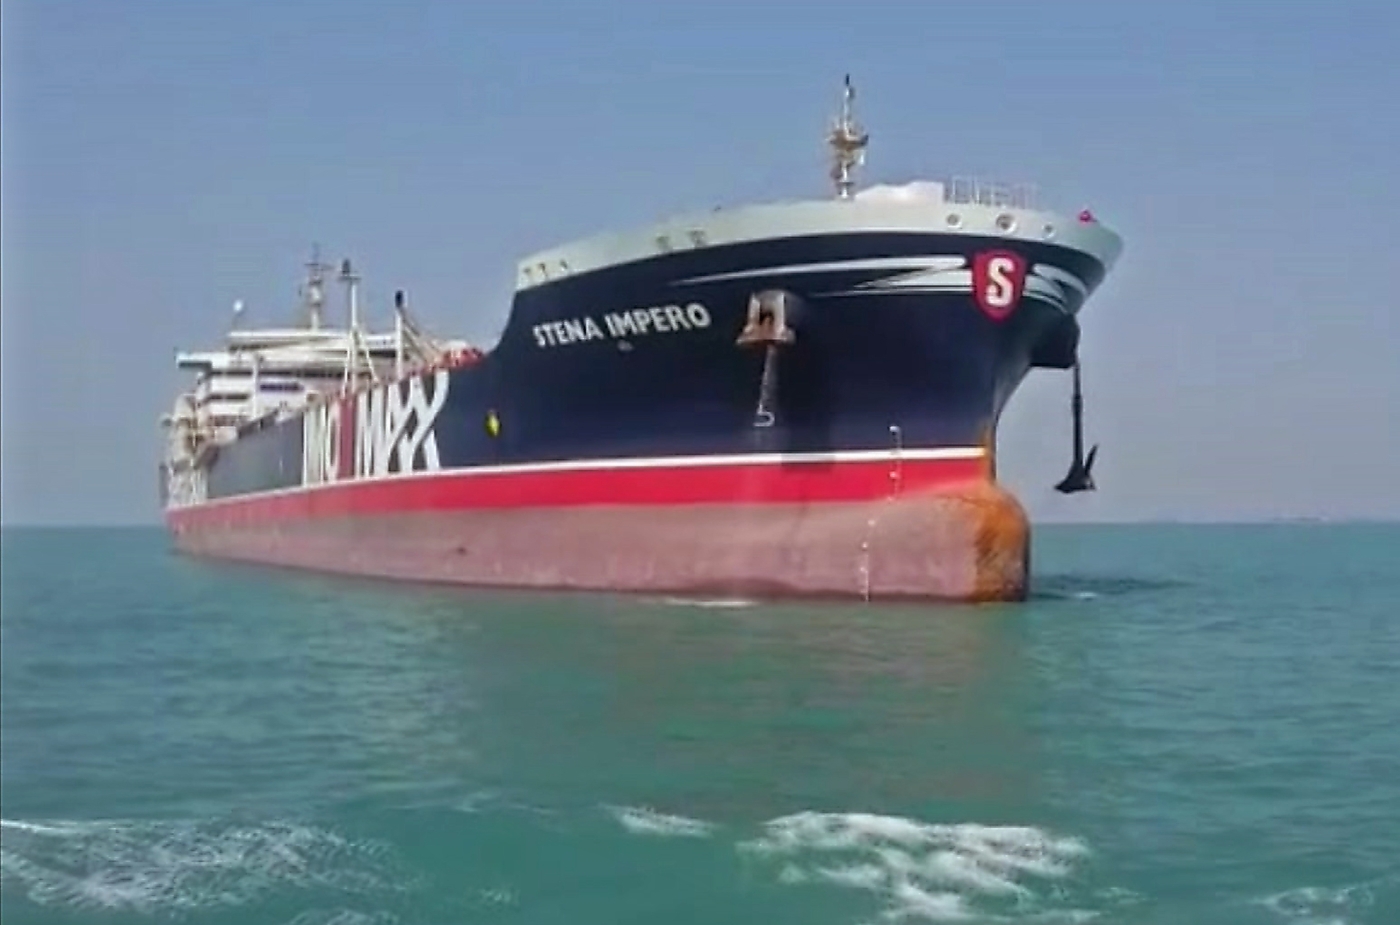 Oil tanker Stena Impero, released by Iran, leaves port